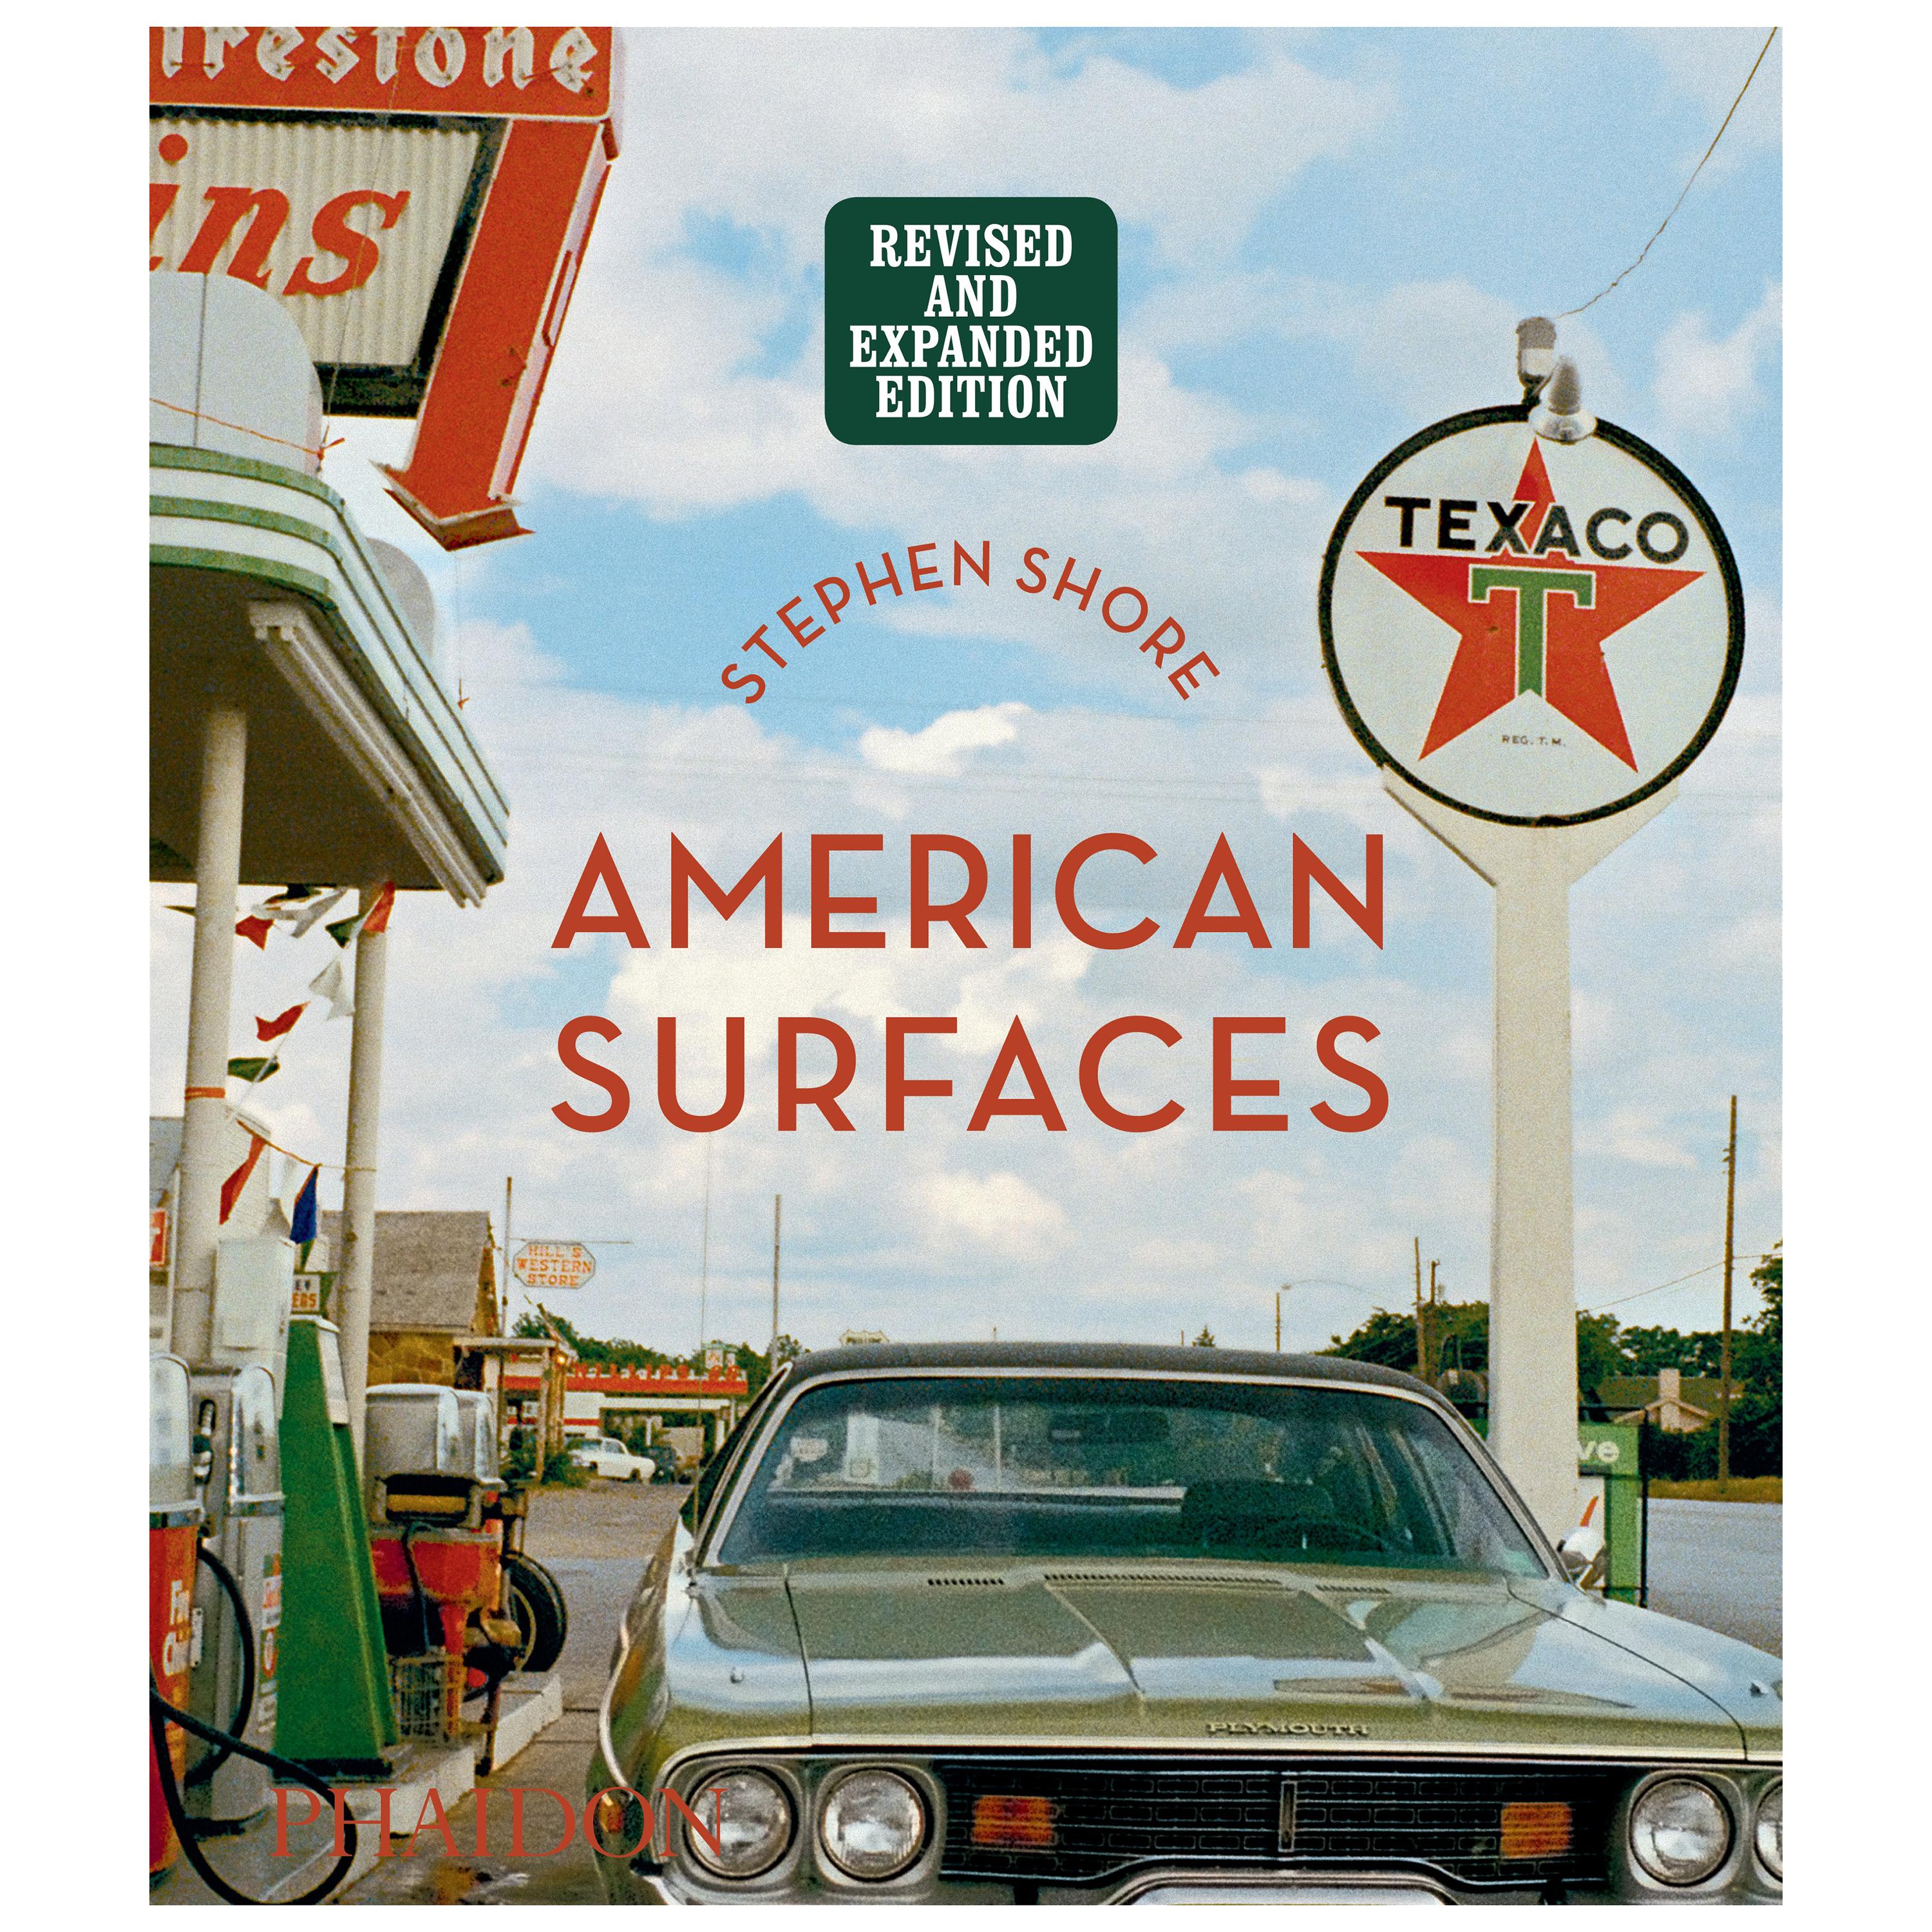 Stephen Shore American Surfaces